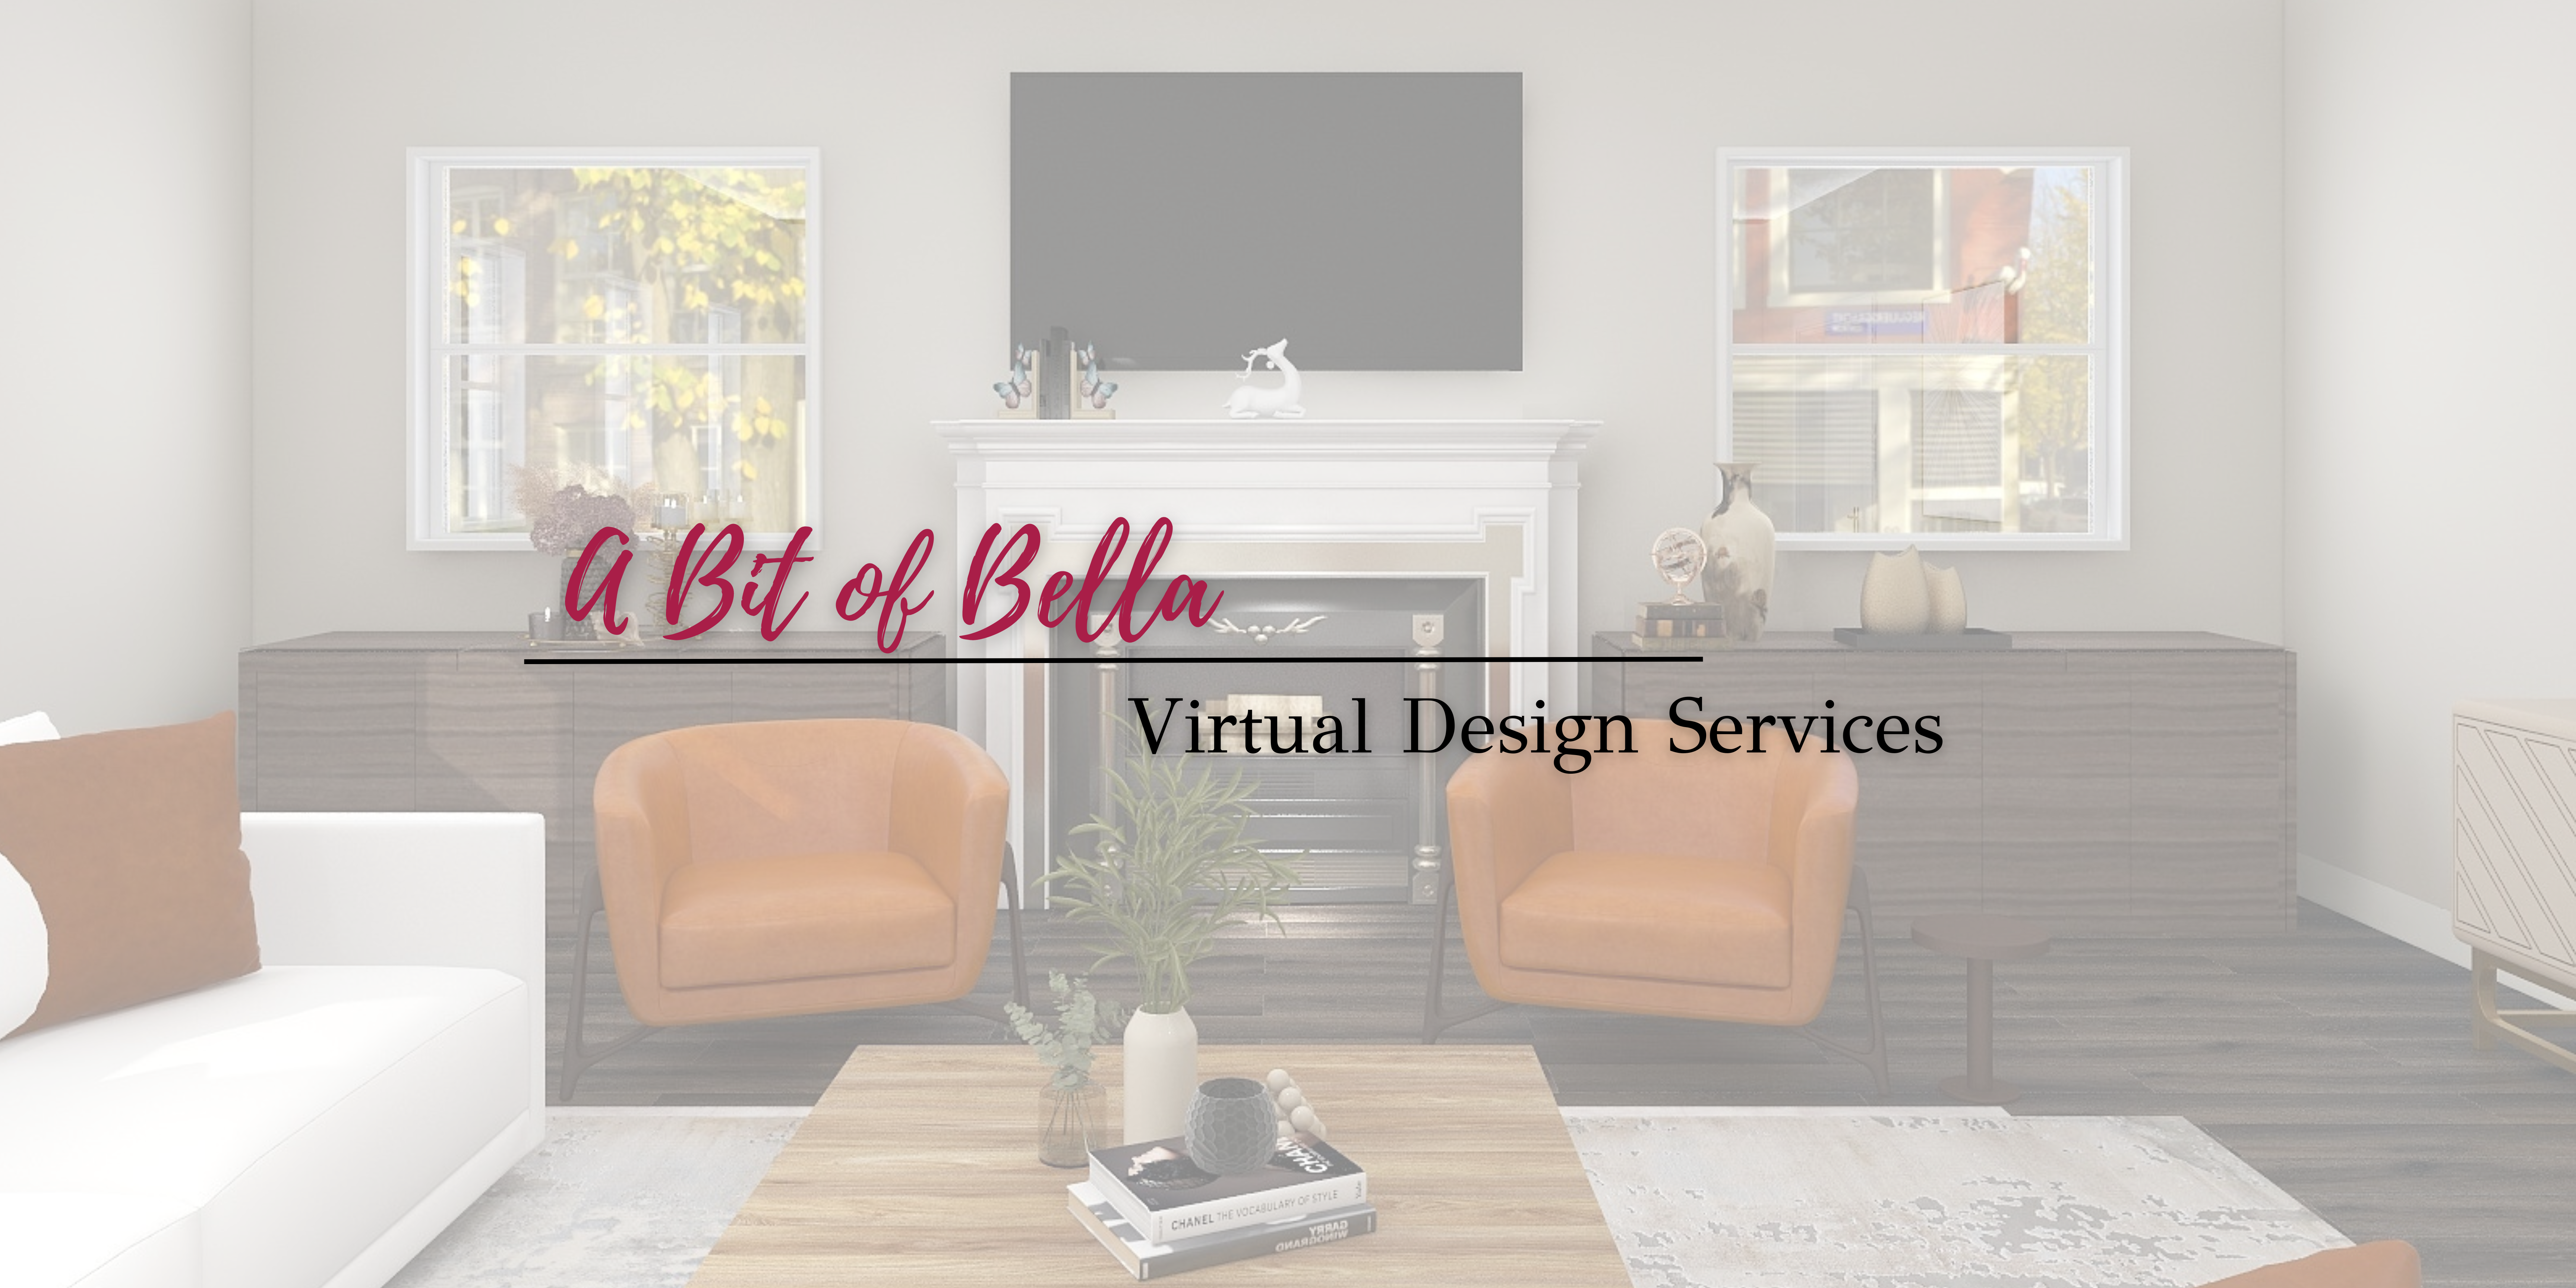 Virtual Interior Design Services